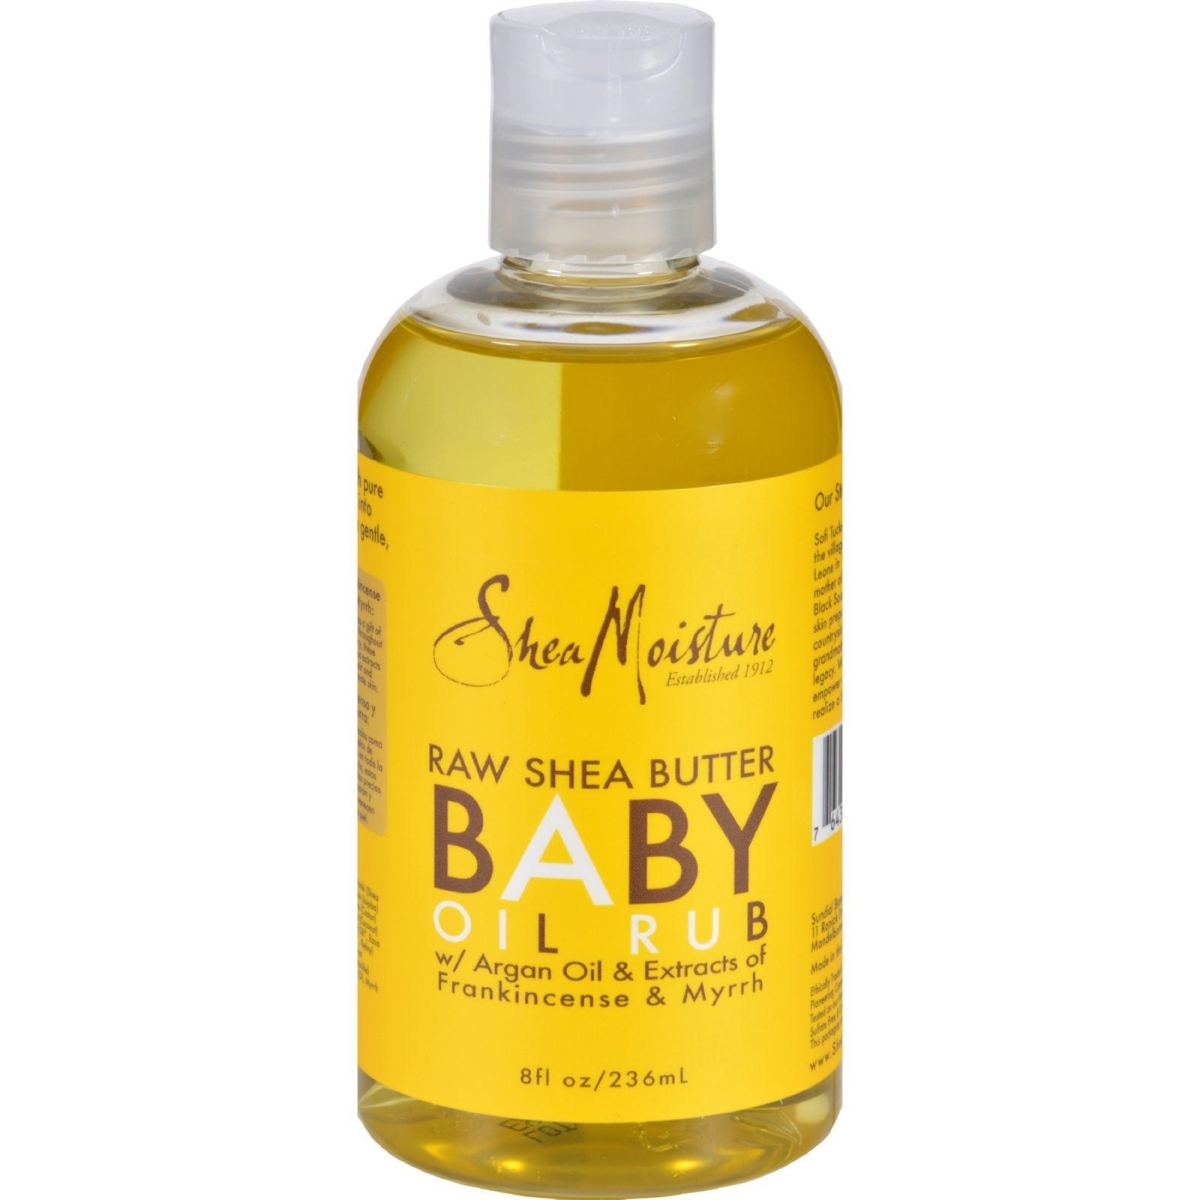 Sheamoisture Hg1090737 8 Oz Baby Oil Rub - Raw Shea Butter